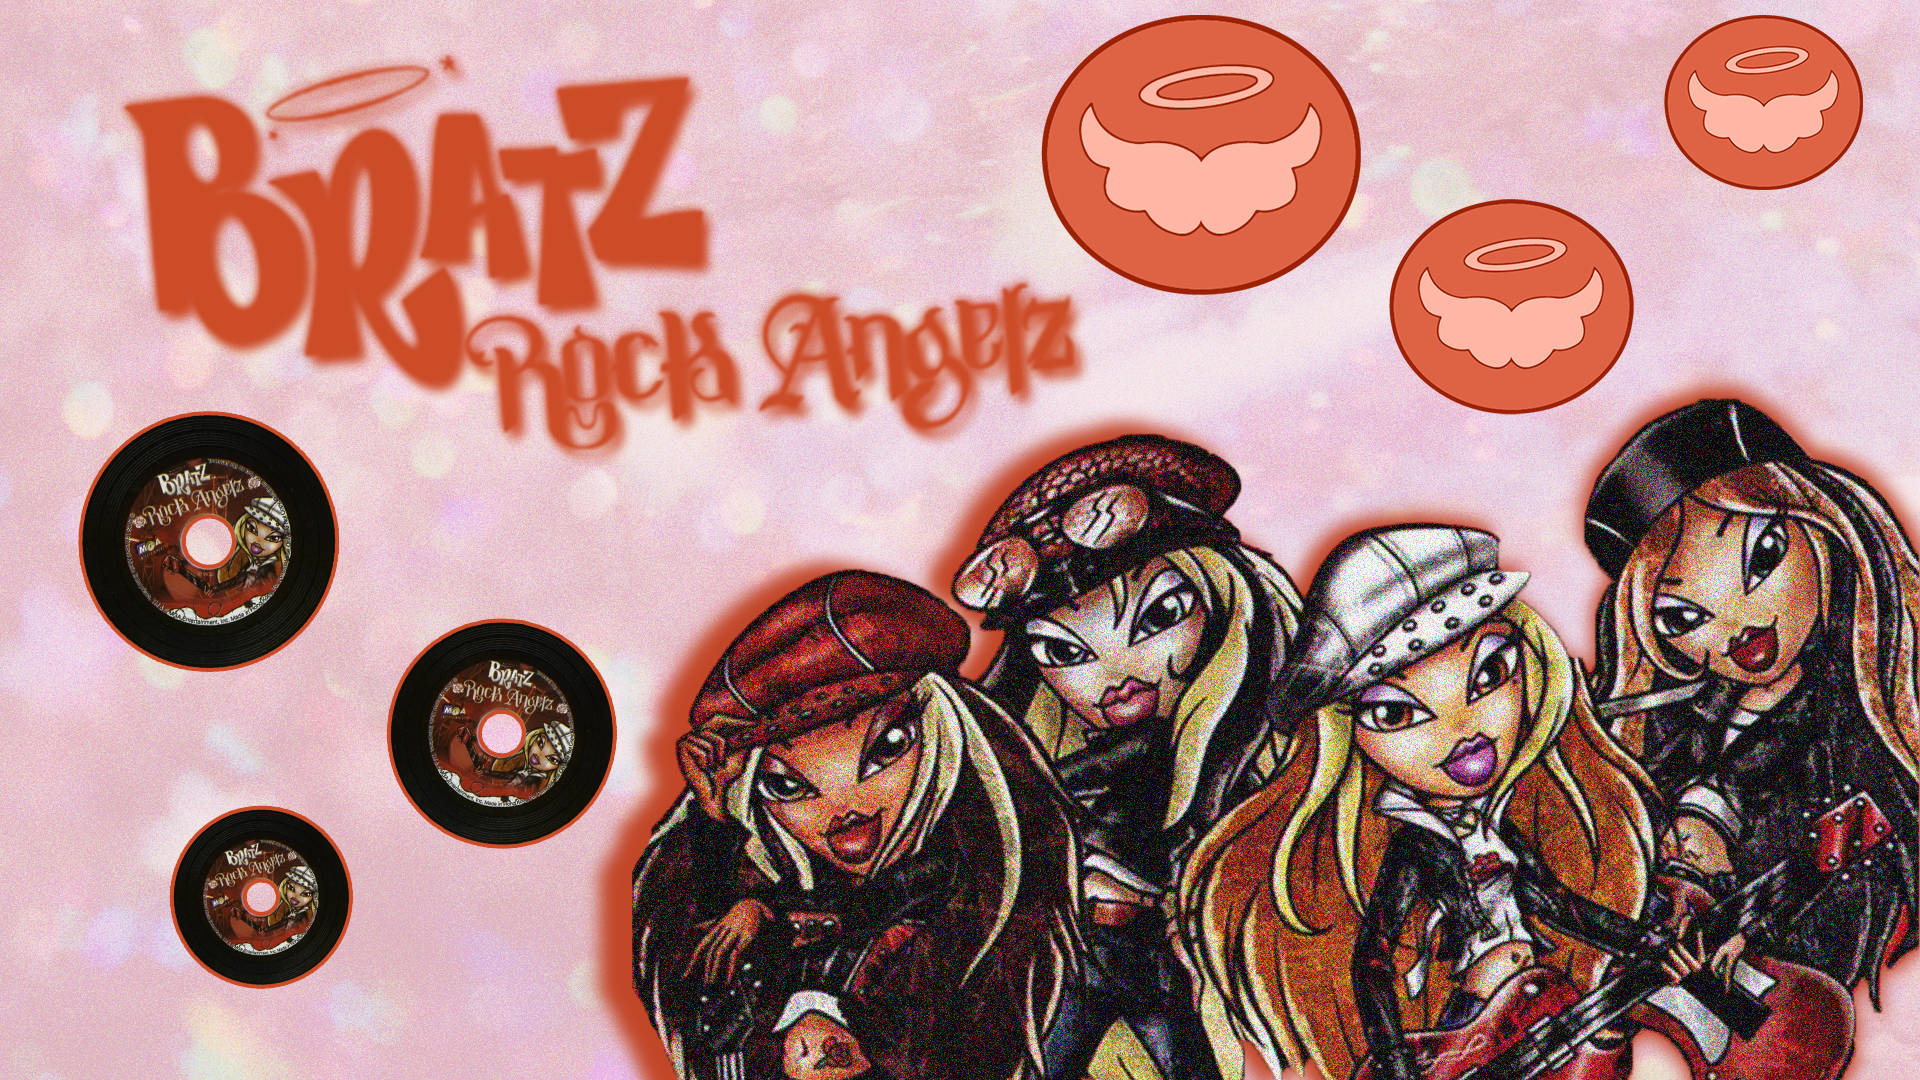 Girl Band Bratz Aesthetic Rock Angelz Background